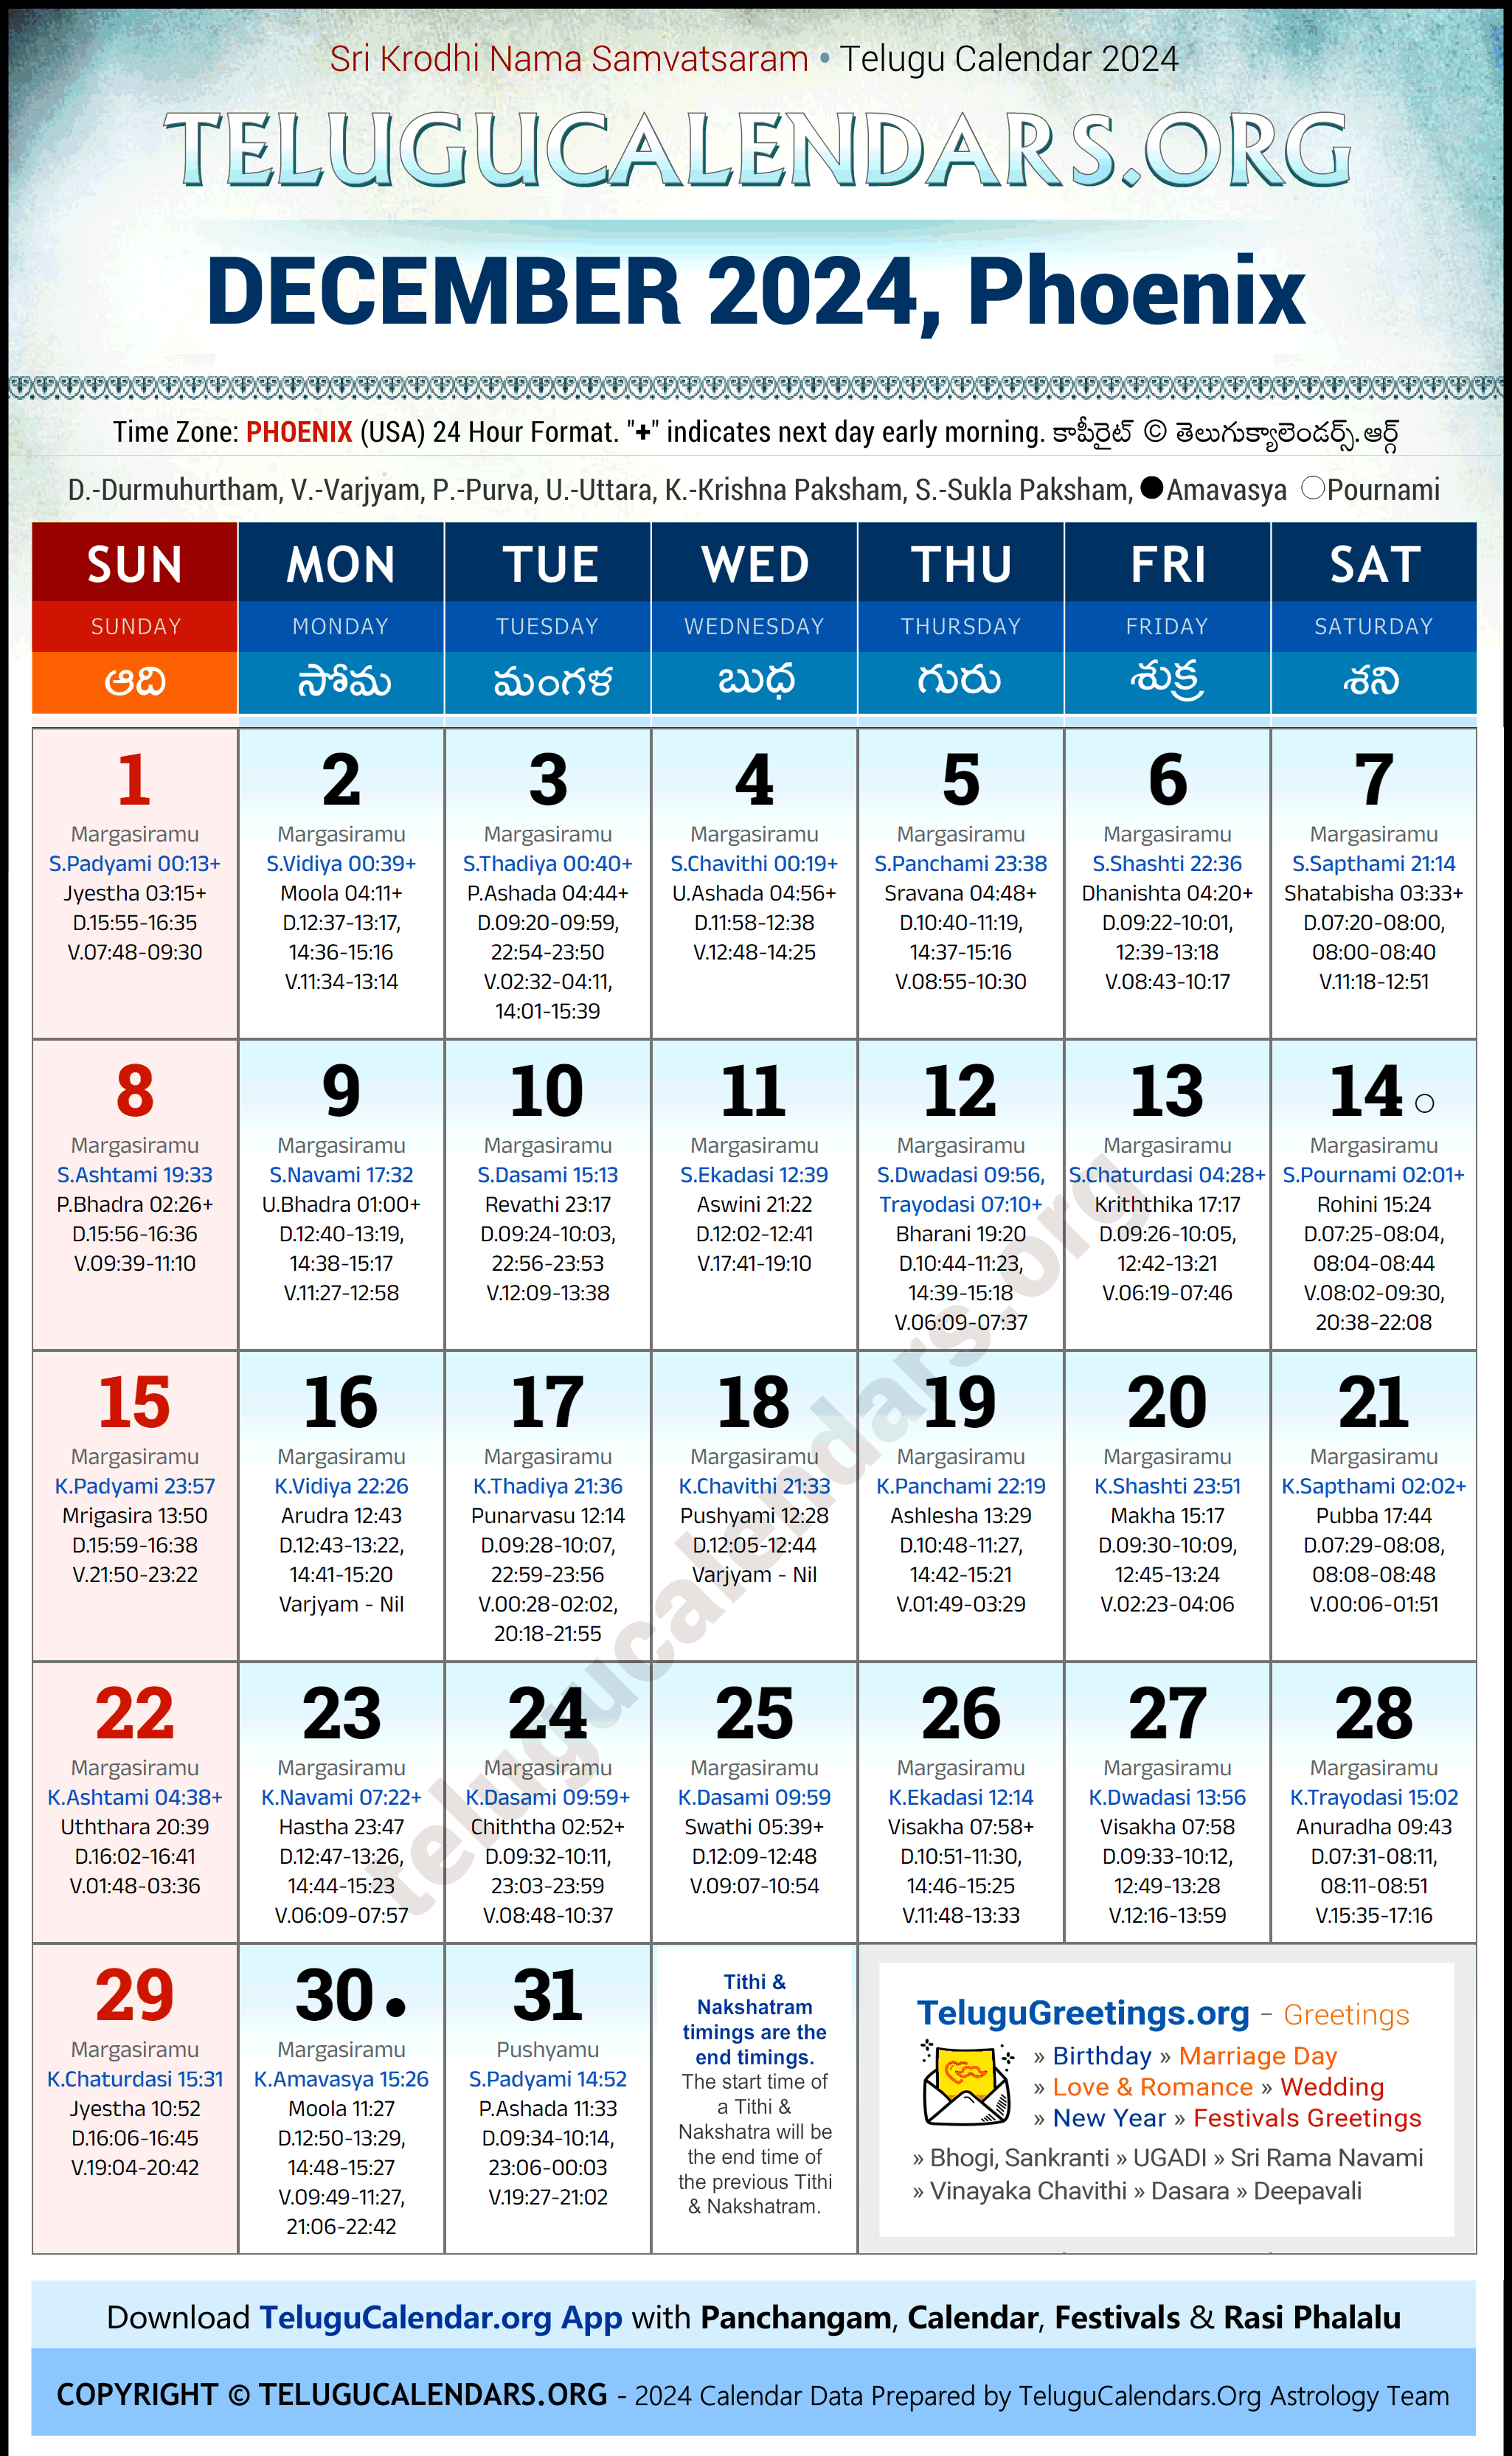 Telugu Calendar 2024 December Festivals for Phoenix